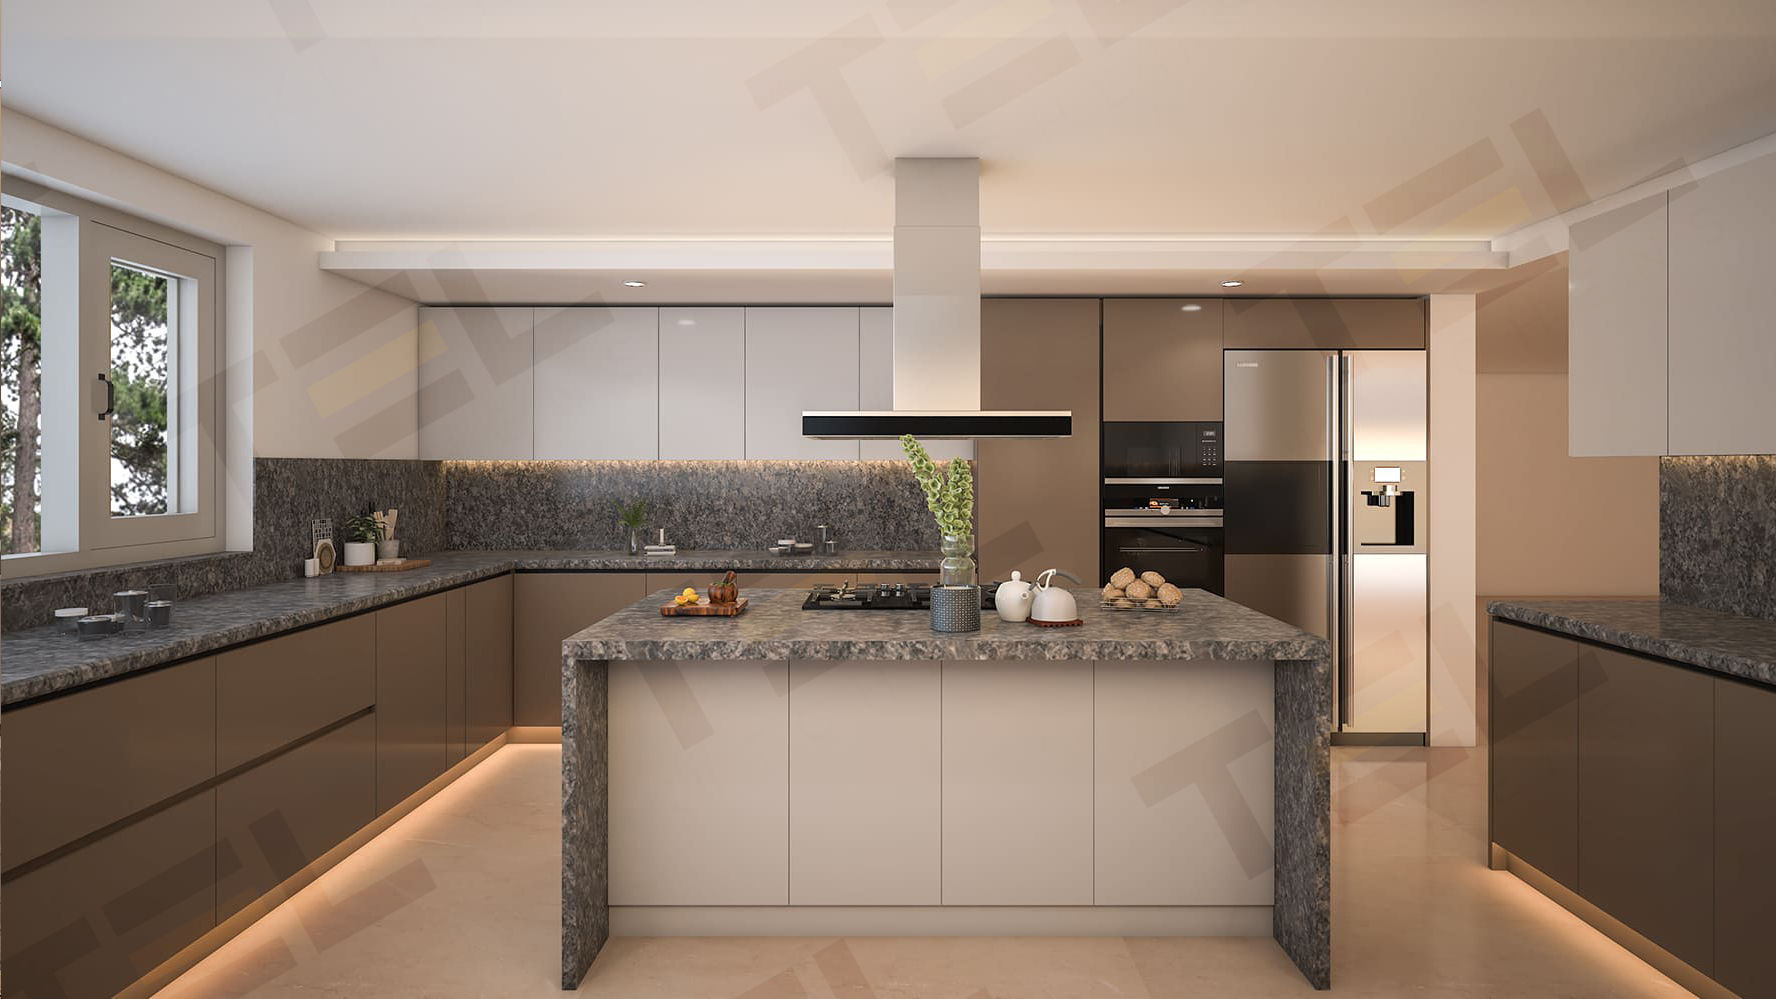 Trending modern kitchen design ideas for you